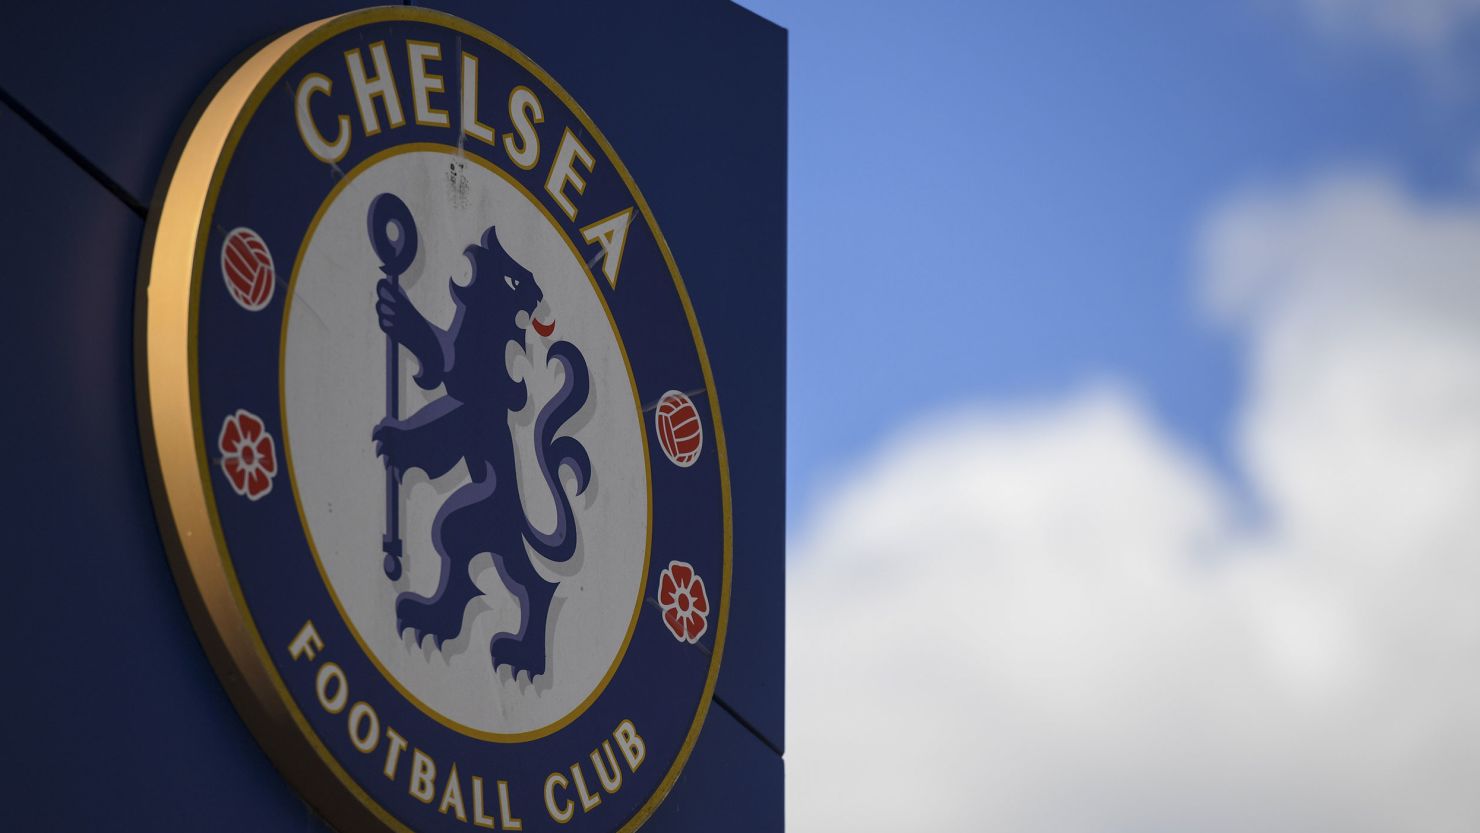 A Chelsea Football Club emblem at Stamford Bridge Stadium in London, UK.